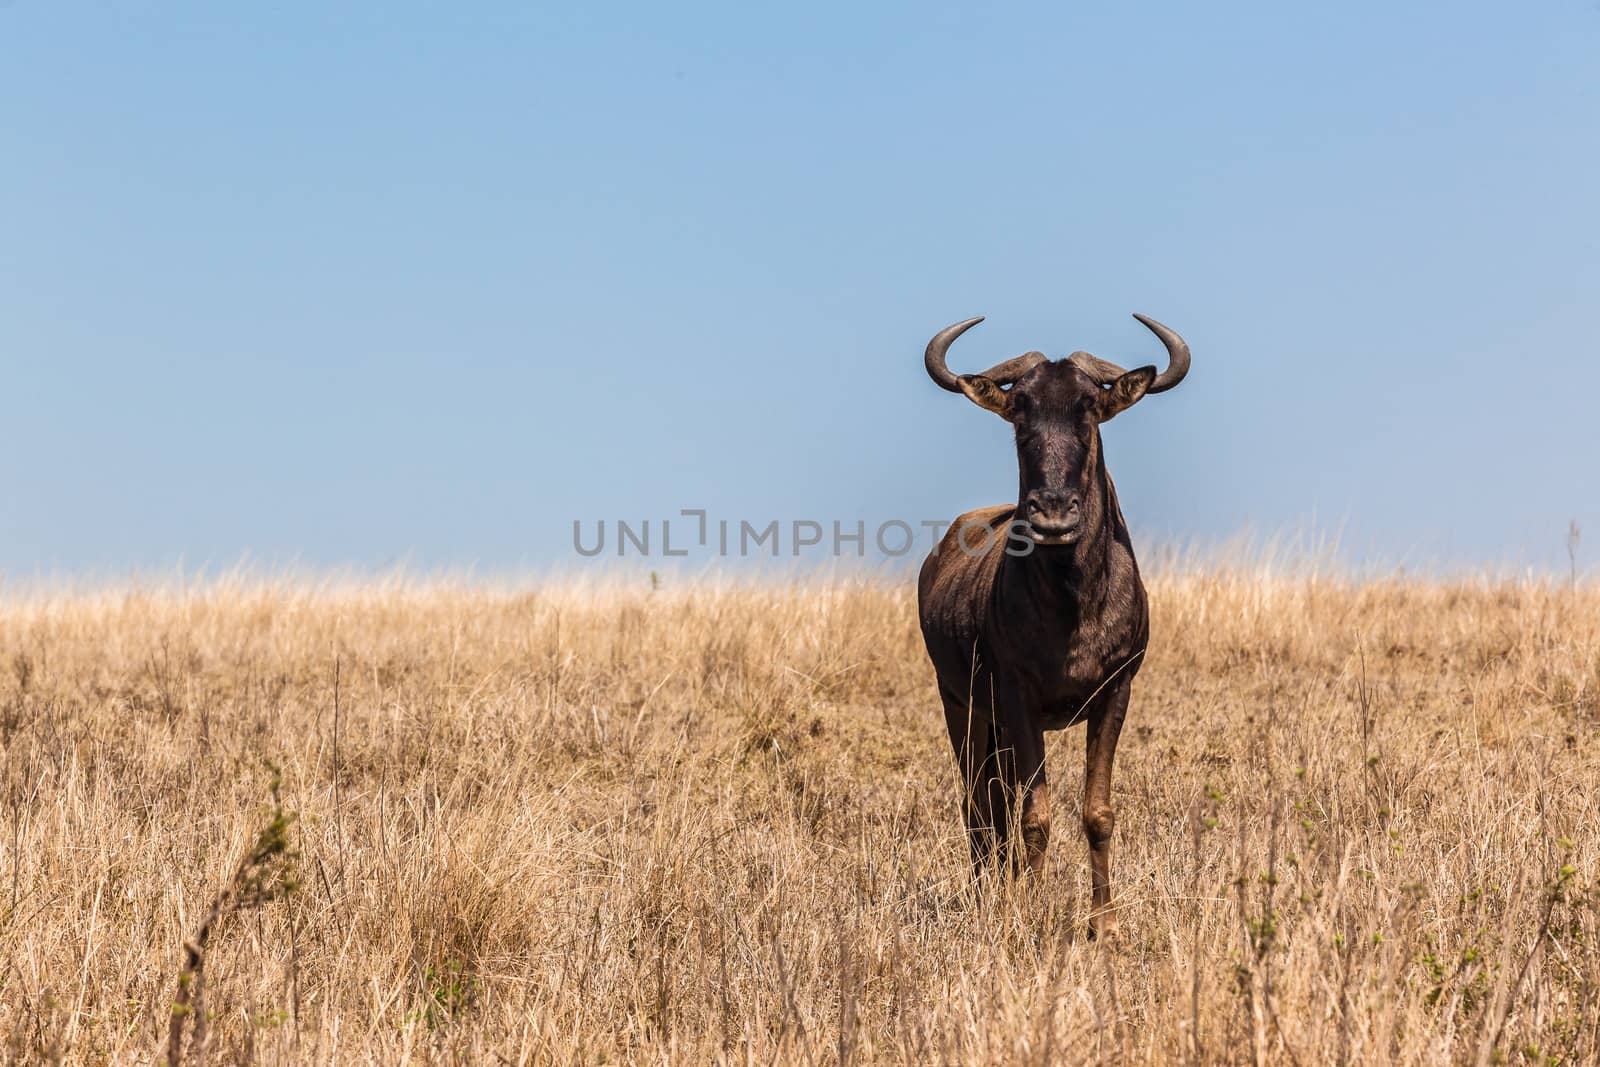 Bull Blue wildebeest animal alone in front of herd in wildlife reserve savannah plains.